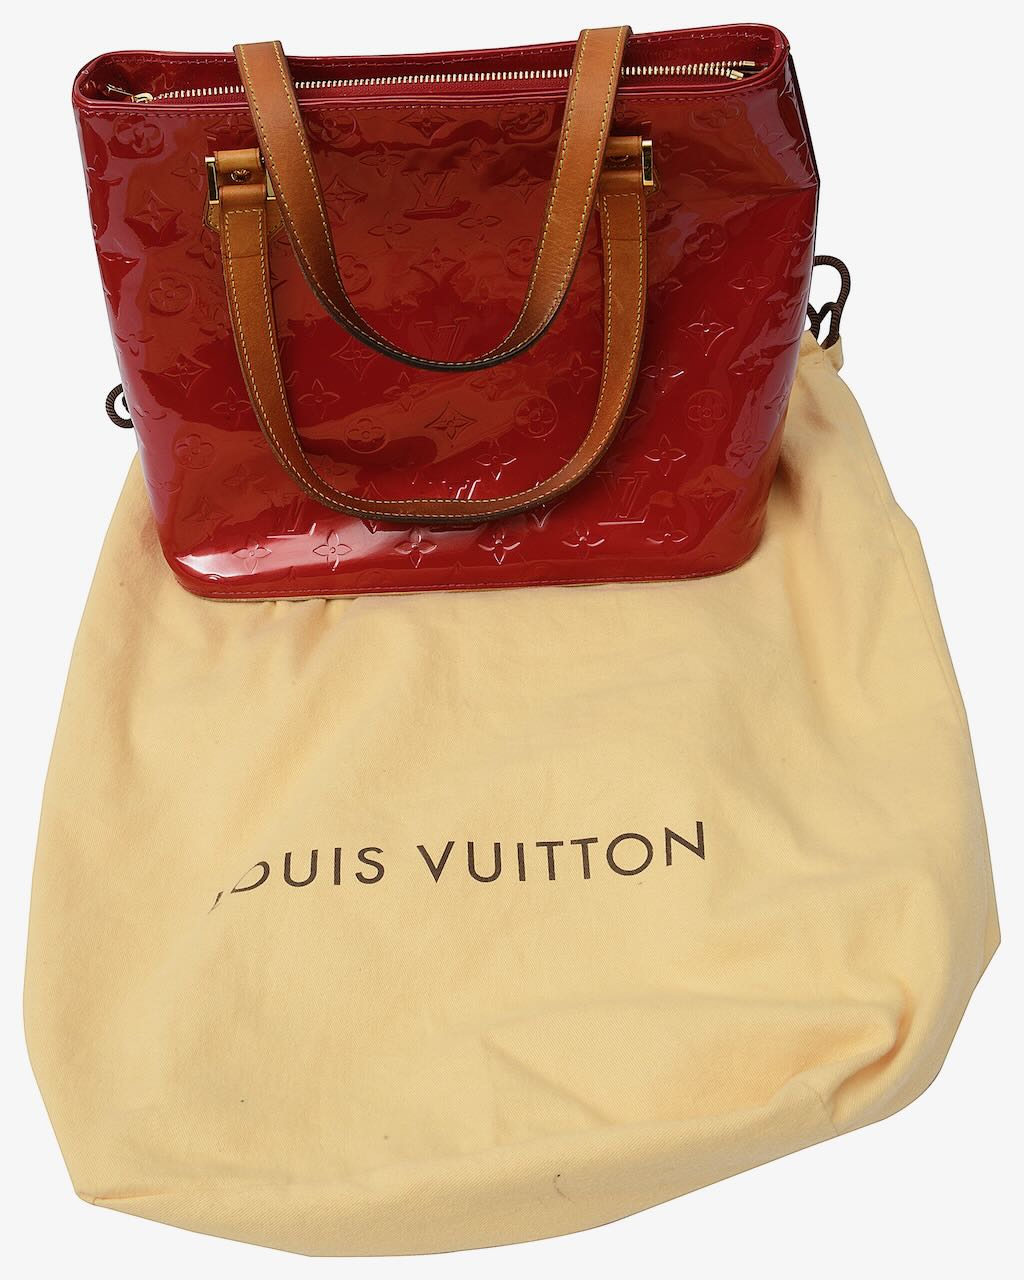 Louis Vuitton Houston 'tote' bag - Image 2 of 2